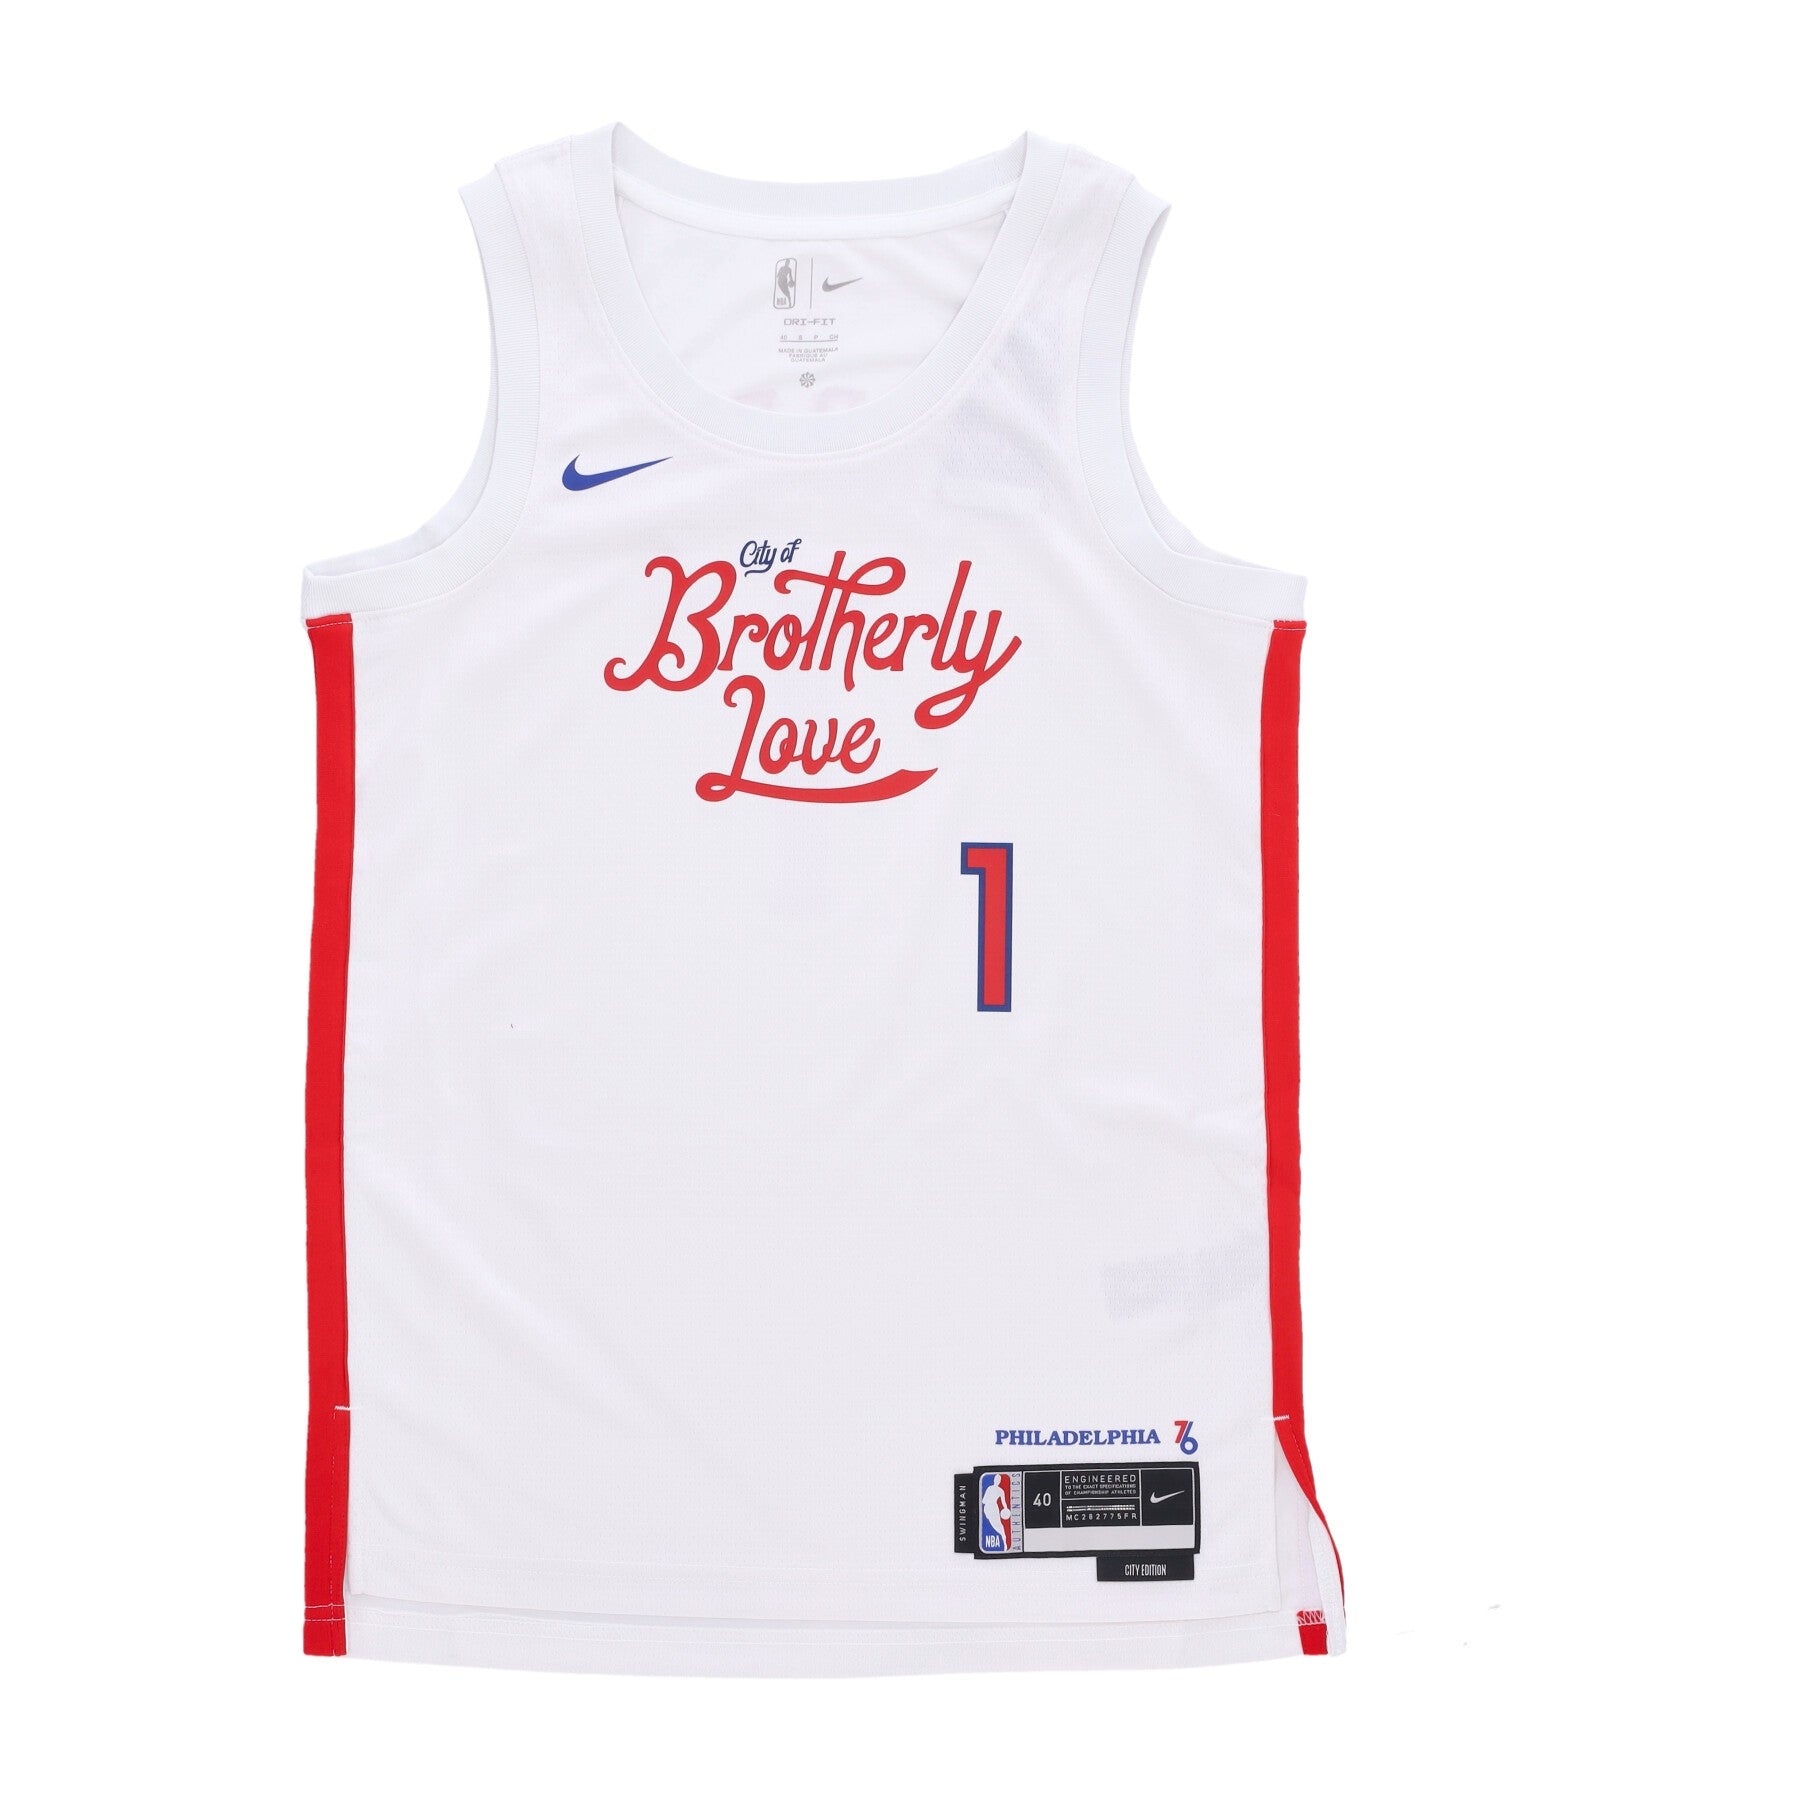 Nike Nba, Canotta Basket Uomo Nba Dri Fit Swingman Jersey City Edition No 1 James Harden Phi76e, White